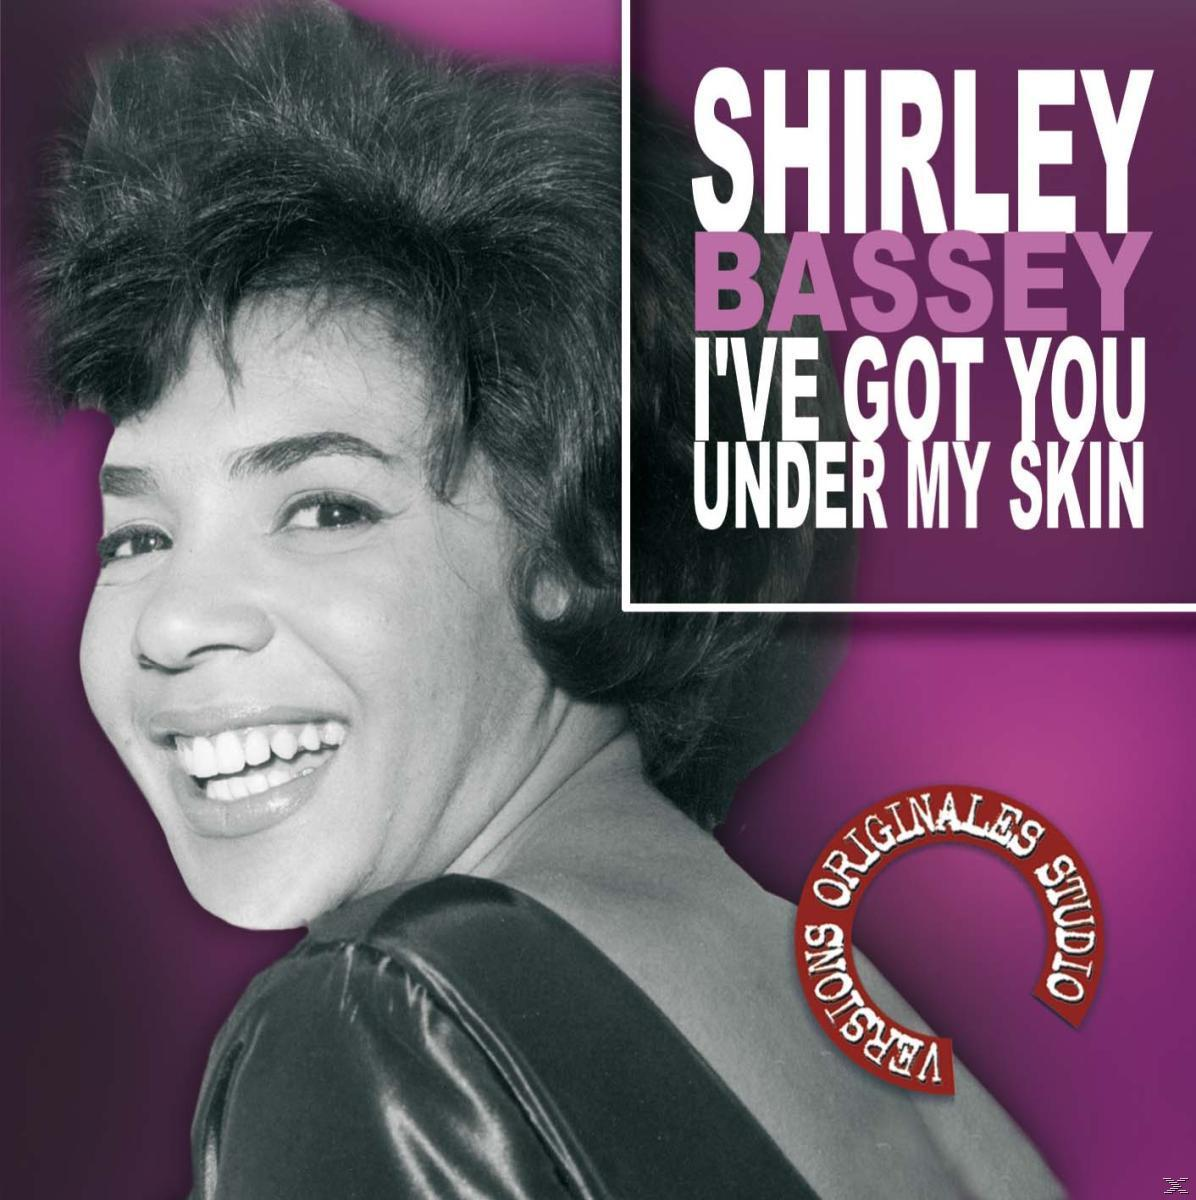 (CD) You - Under Got Skin My Shirley - I\'ve Bassey